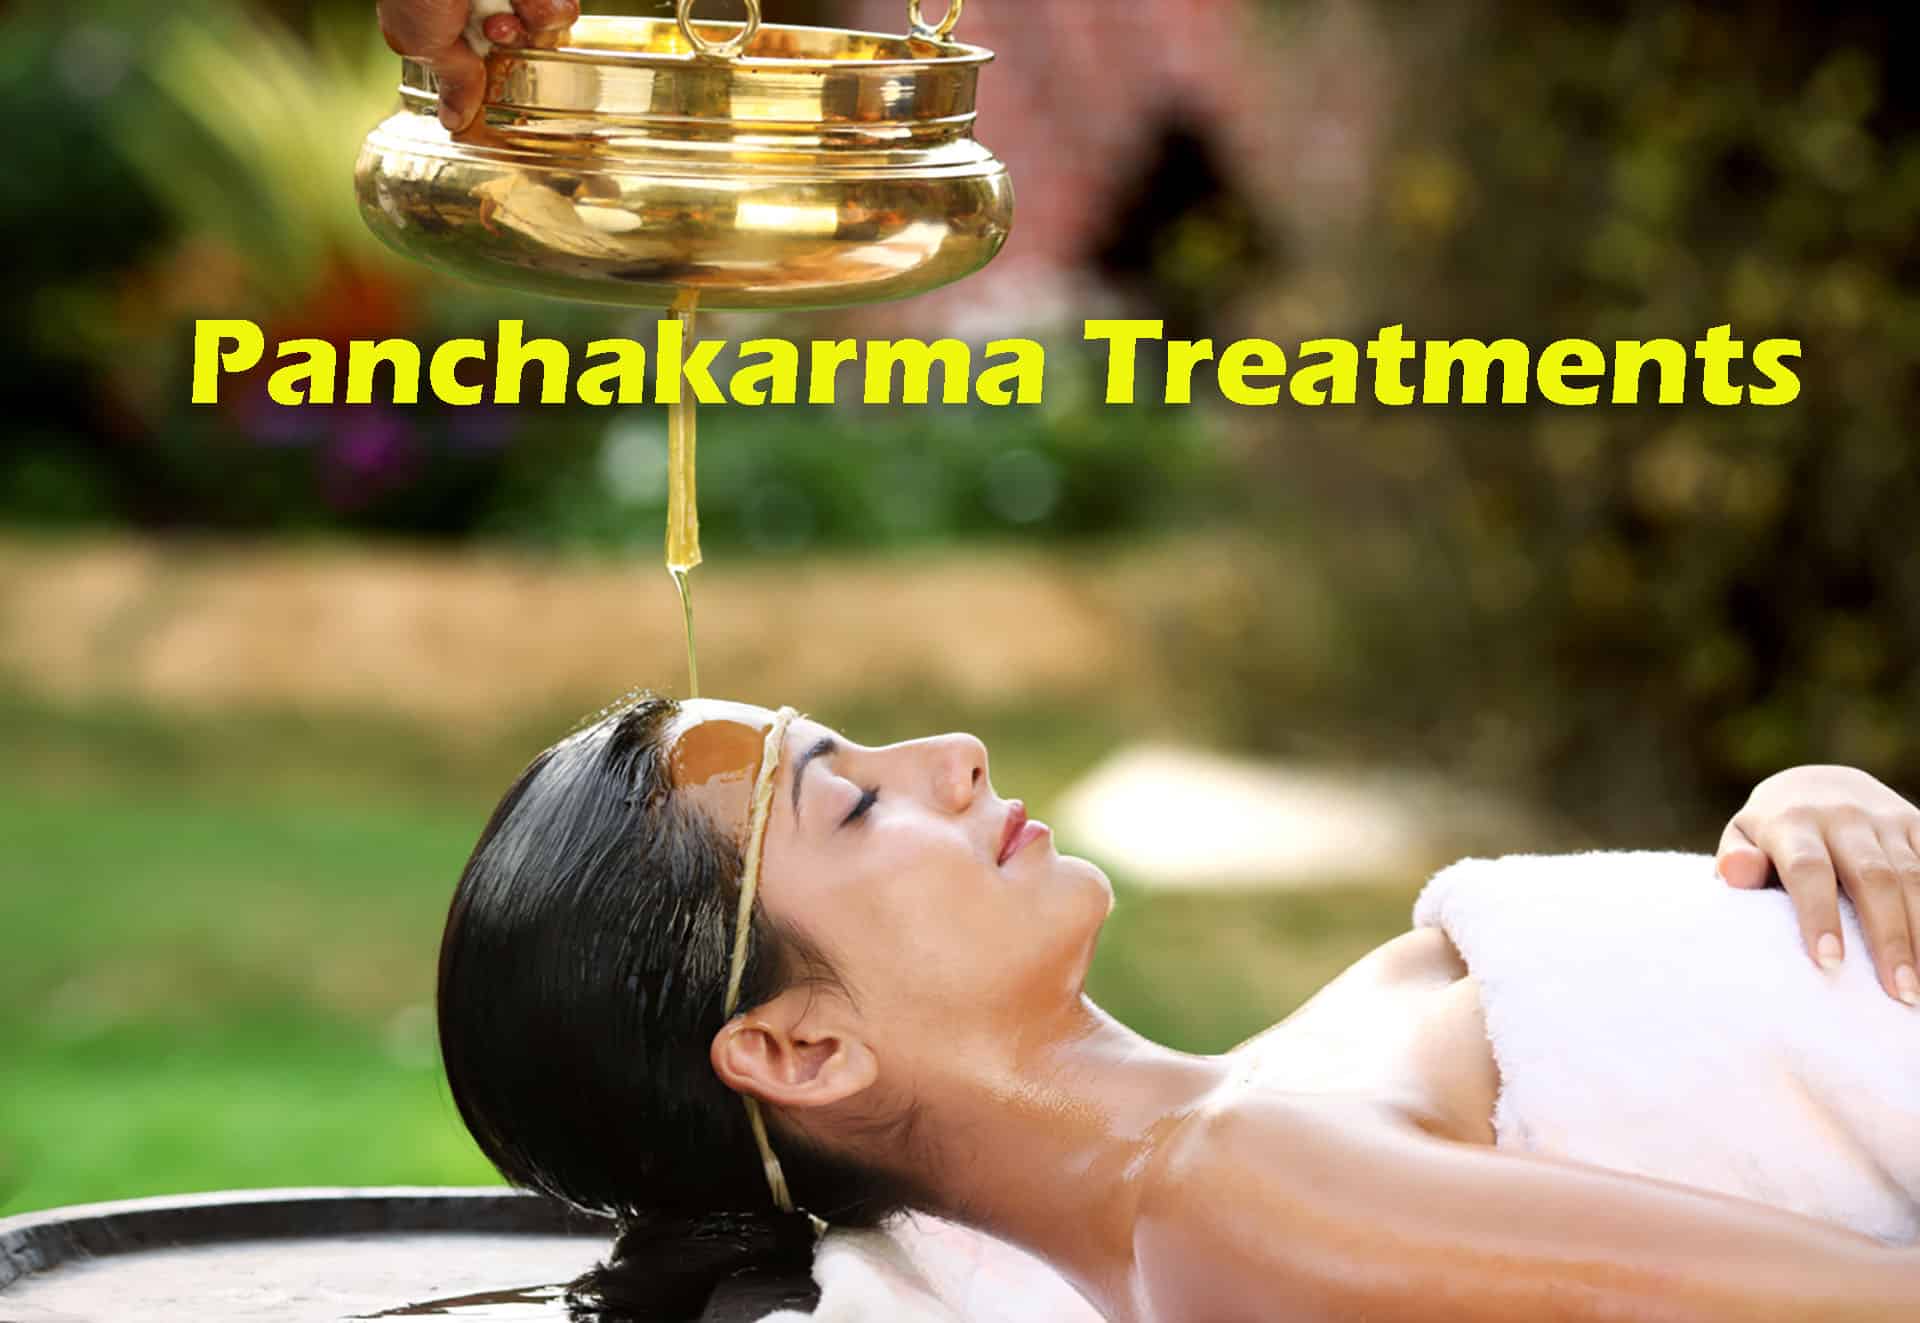 Panchakarma Treatments